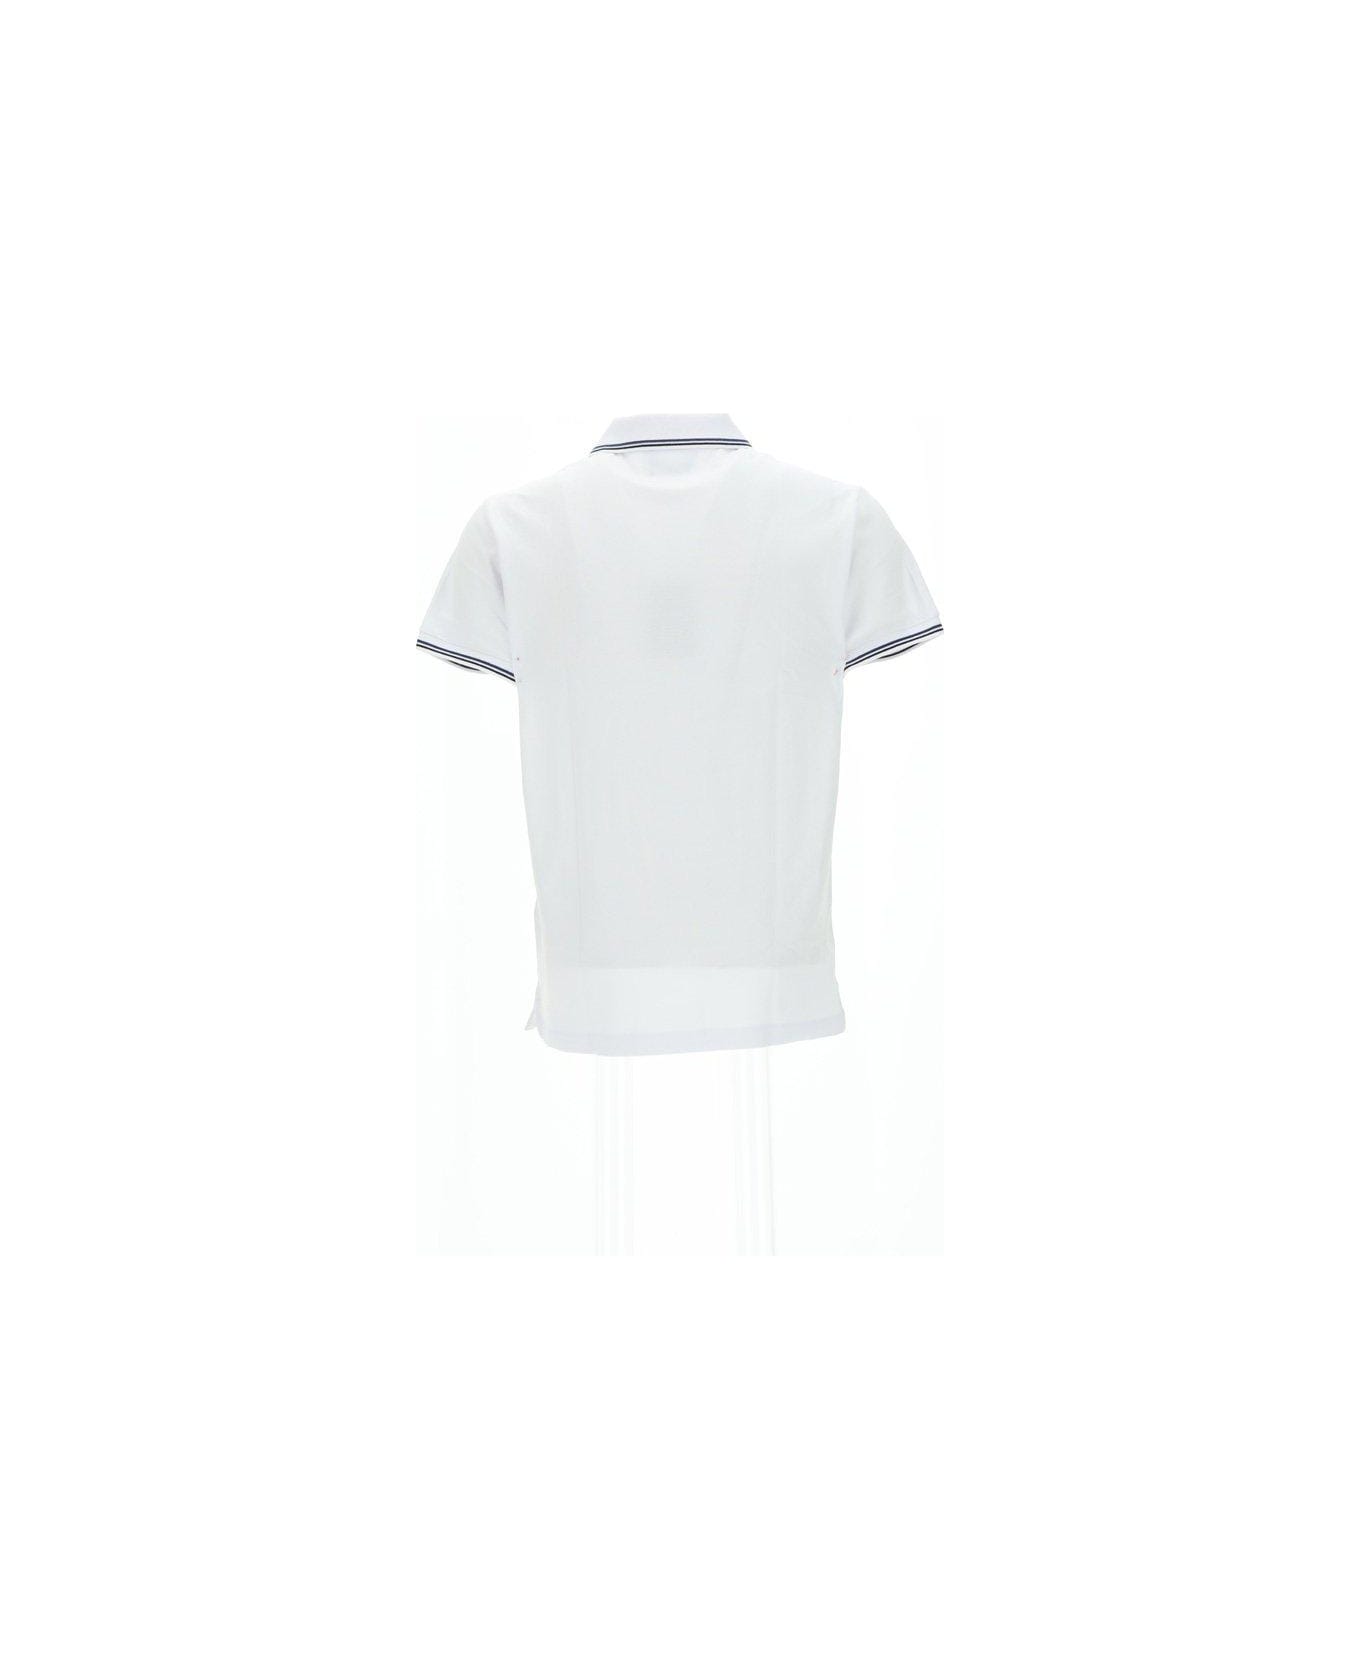 Emporio Armani Logo Embroidered Short Sleeved Polo Shirt - Bianco ottico シャツ